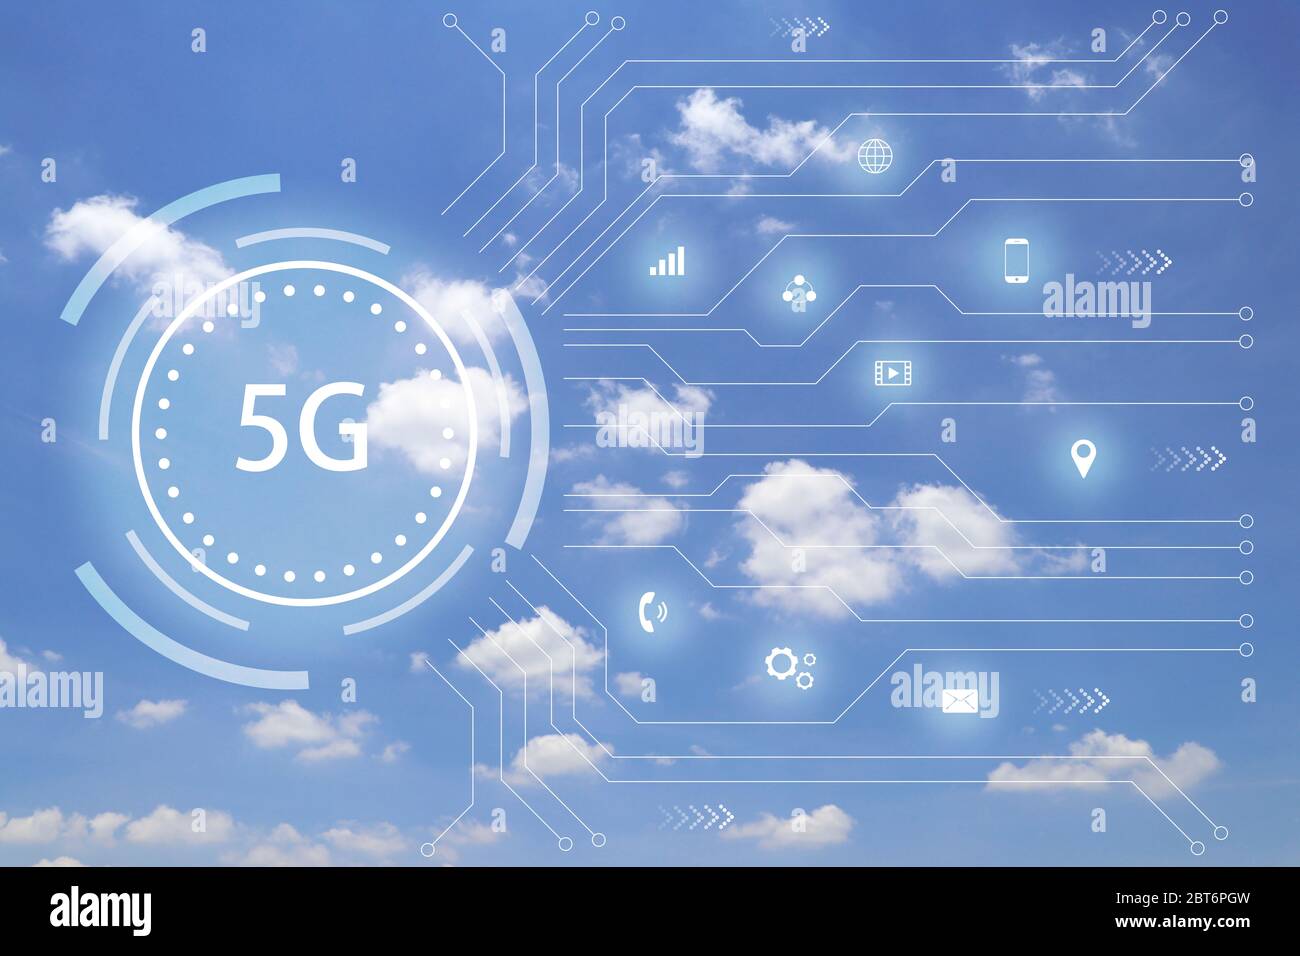 5G network with communication symbols on blue sky background. Stock Photo